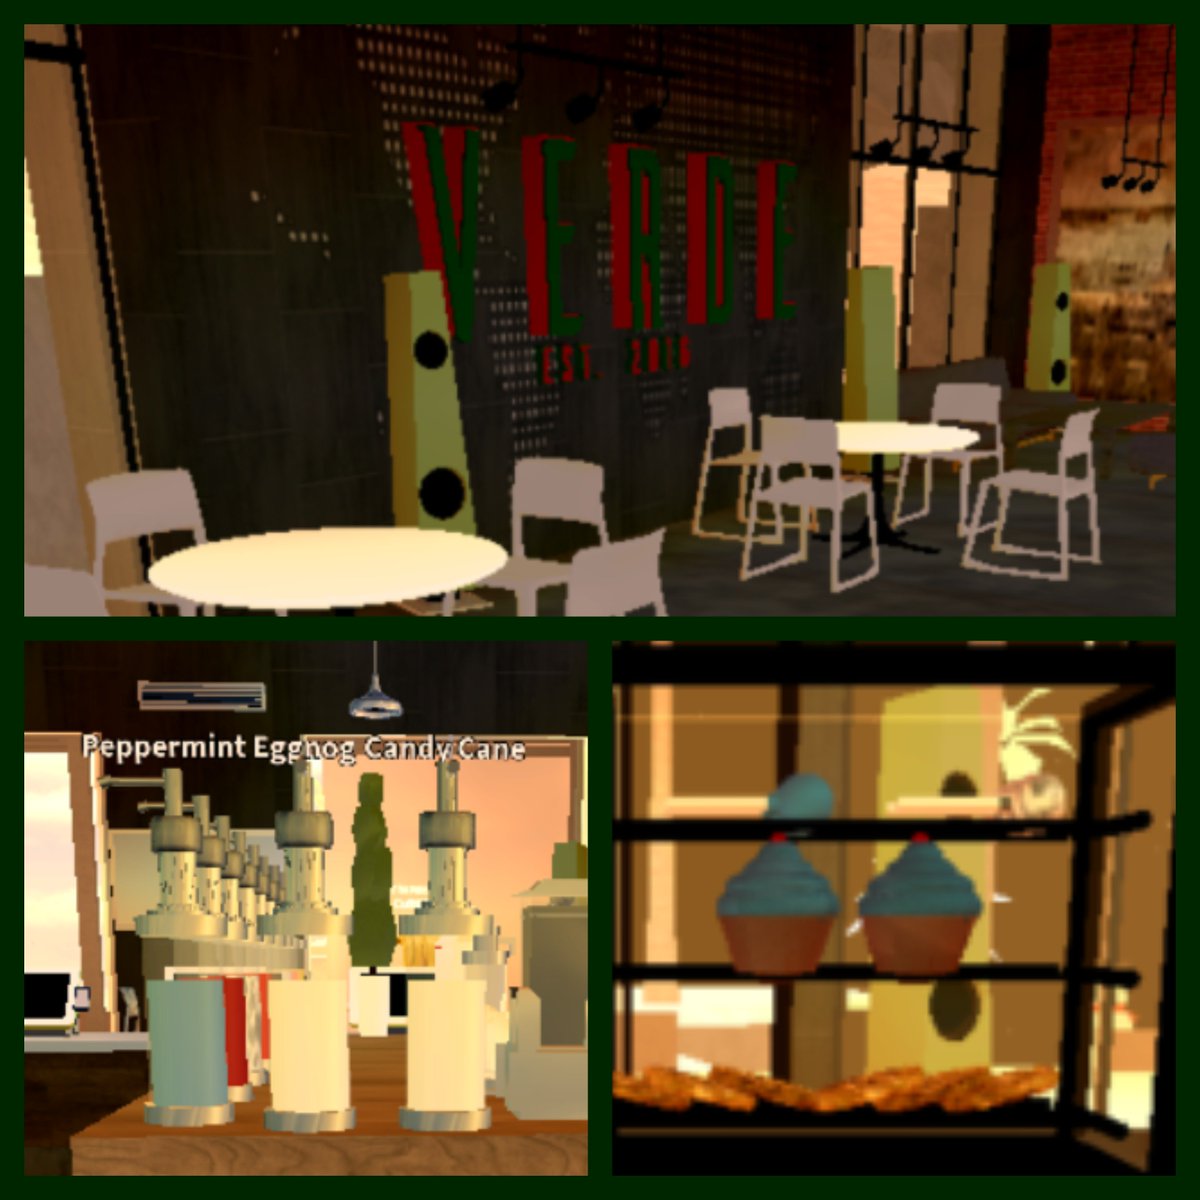 Verde On Twitter More Special Christmas Menu Items Coming Soon - verde cafe menu roblox